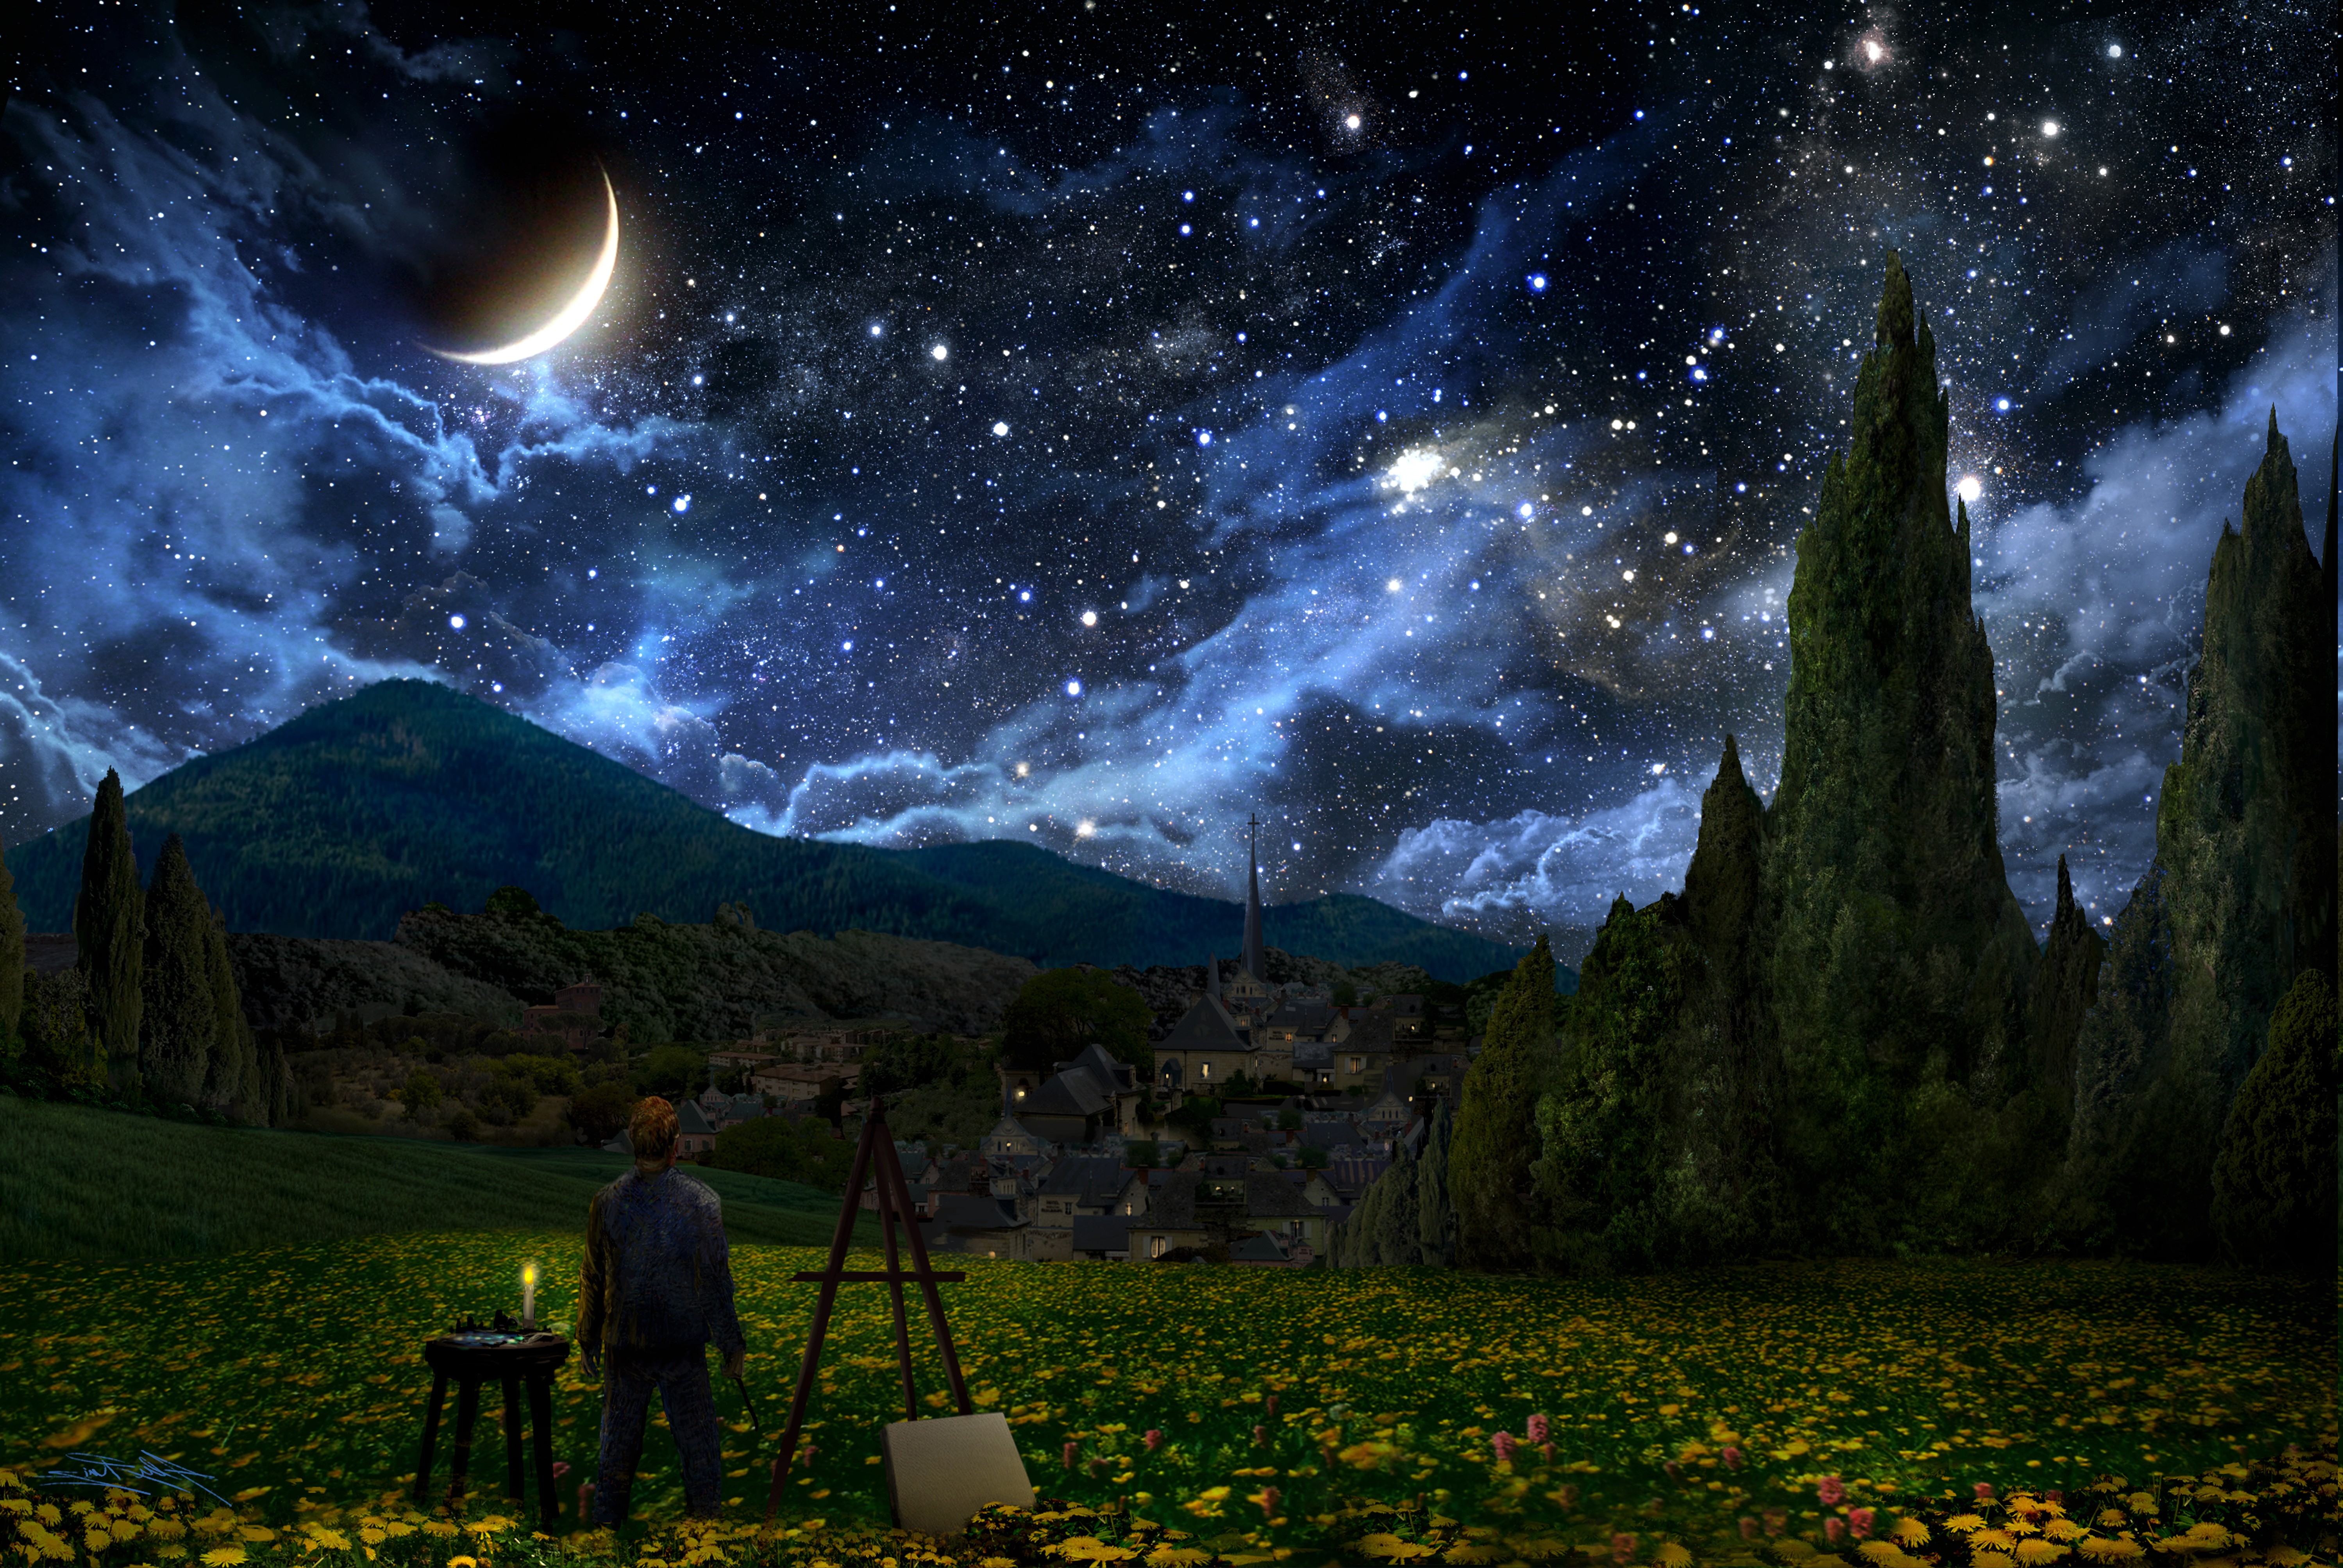 Starry Night Painting Wallpaper 4k - Image to u